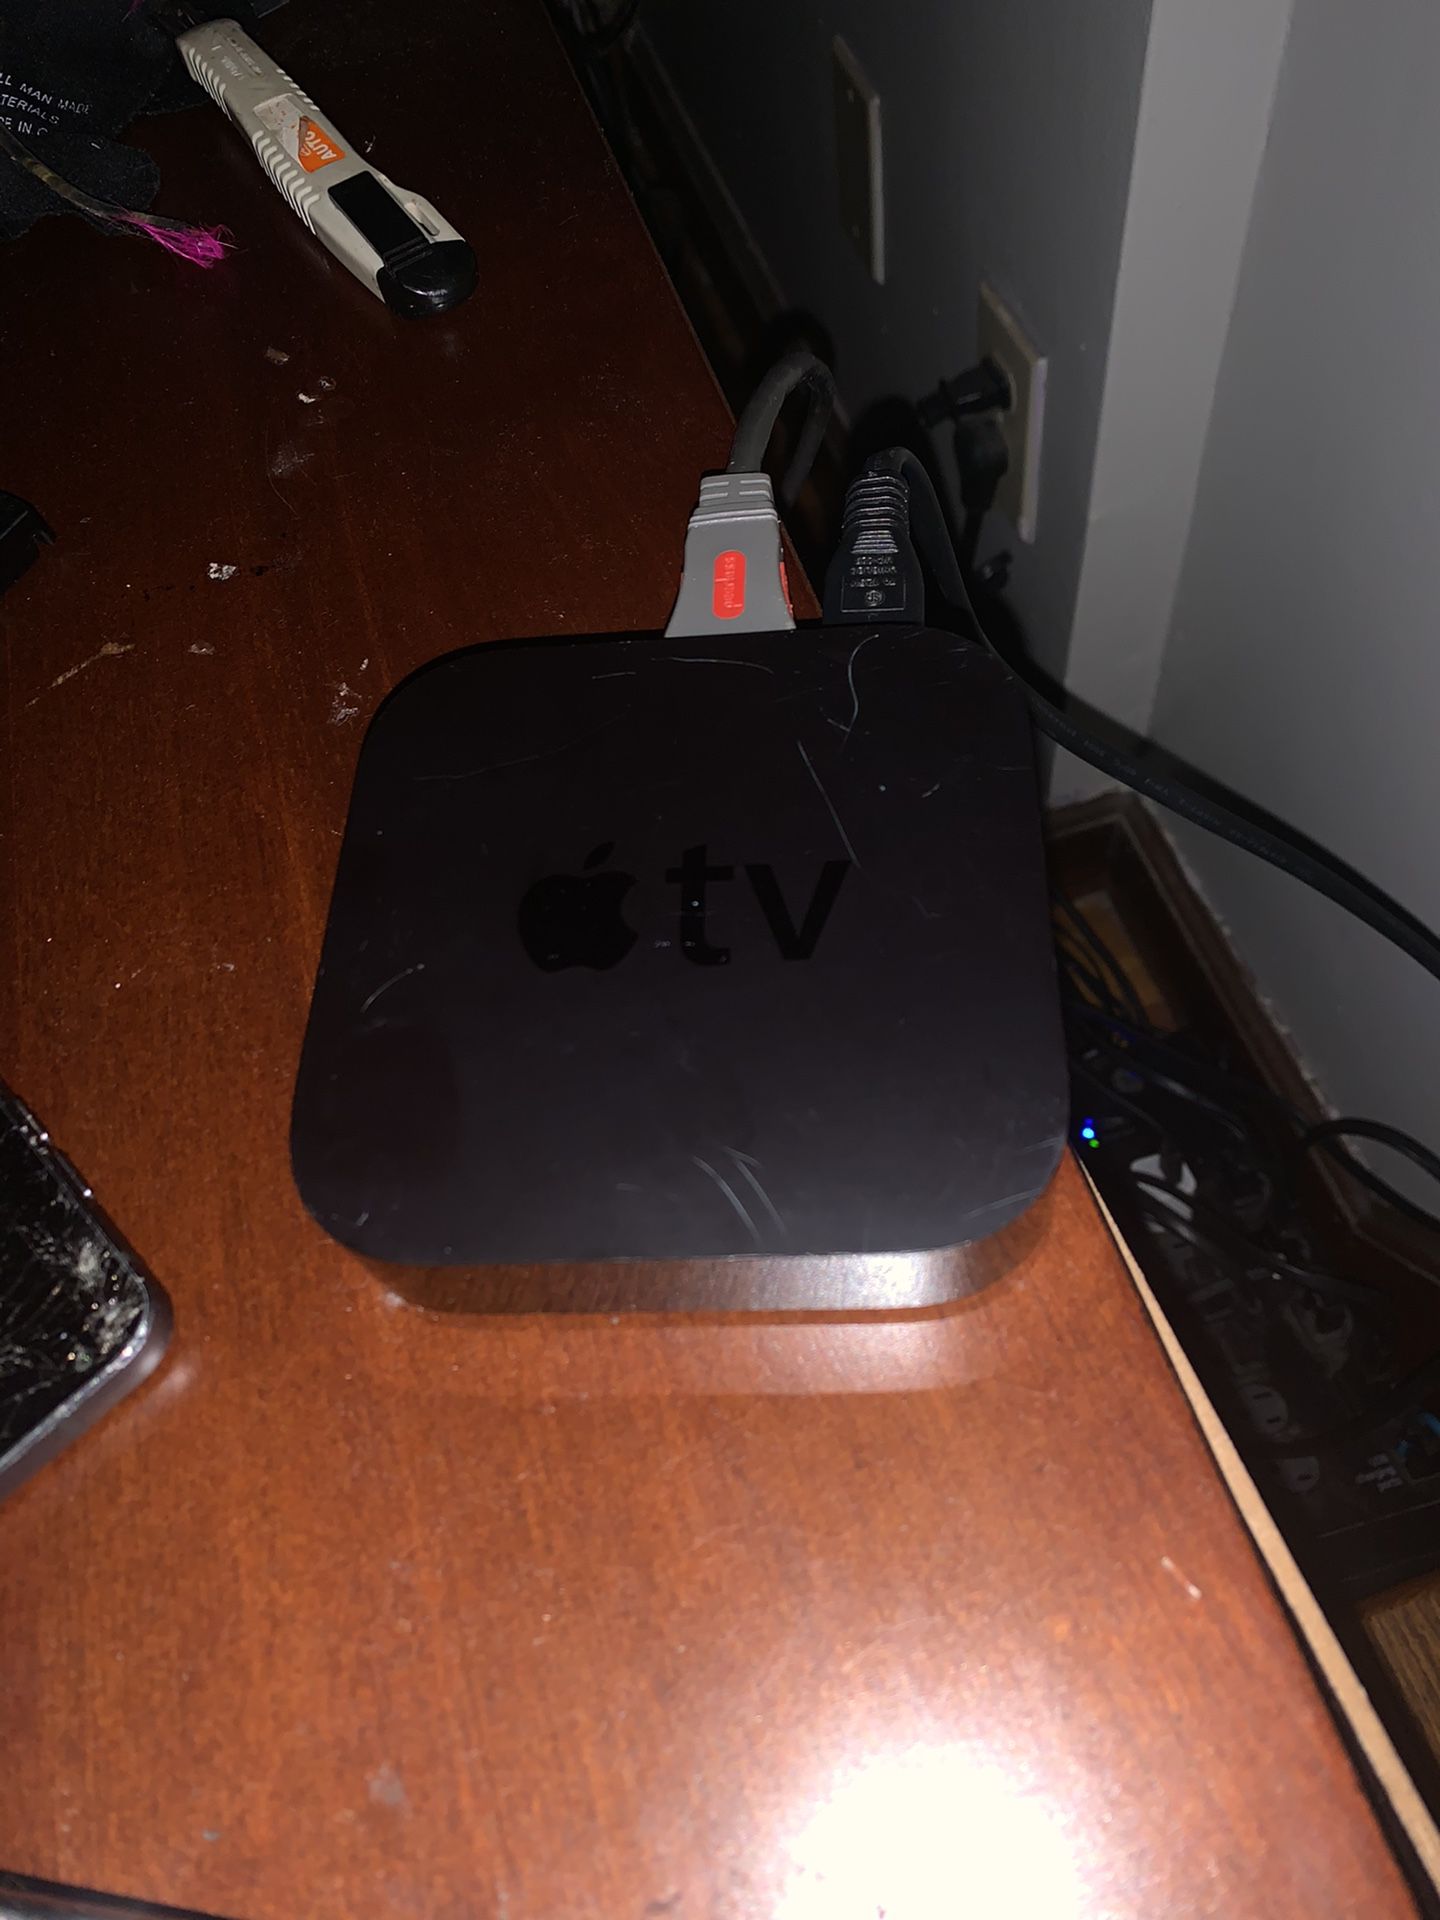 Apple TV Third generation